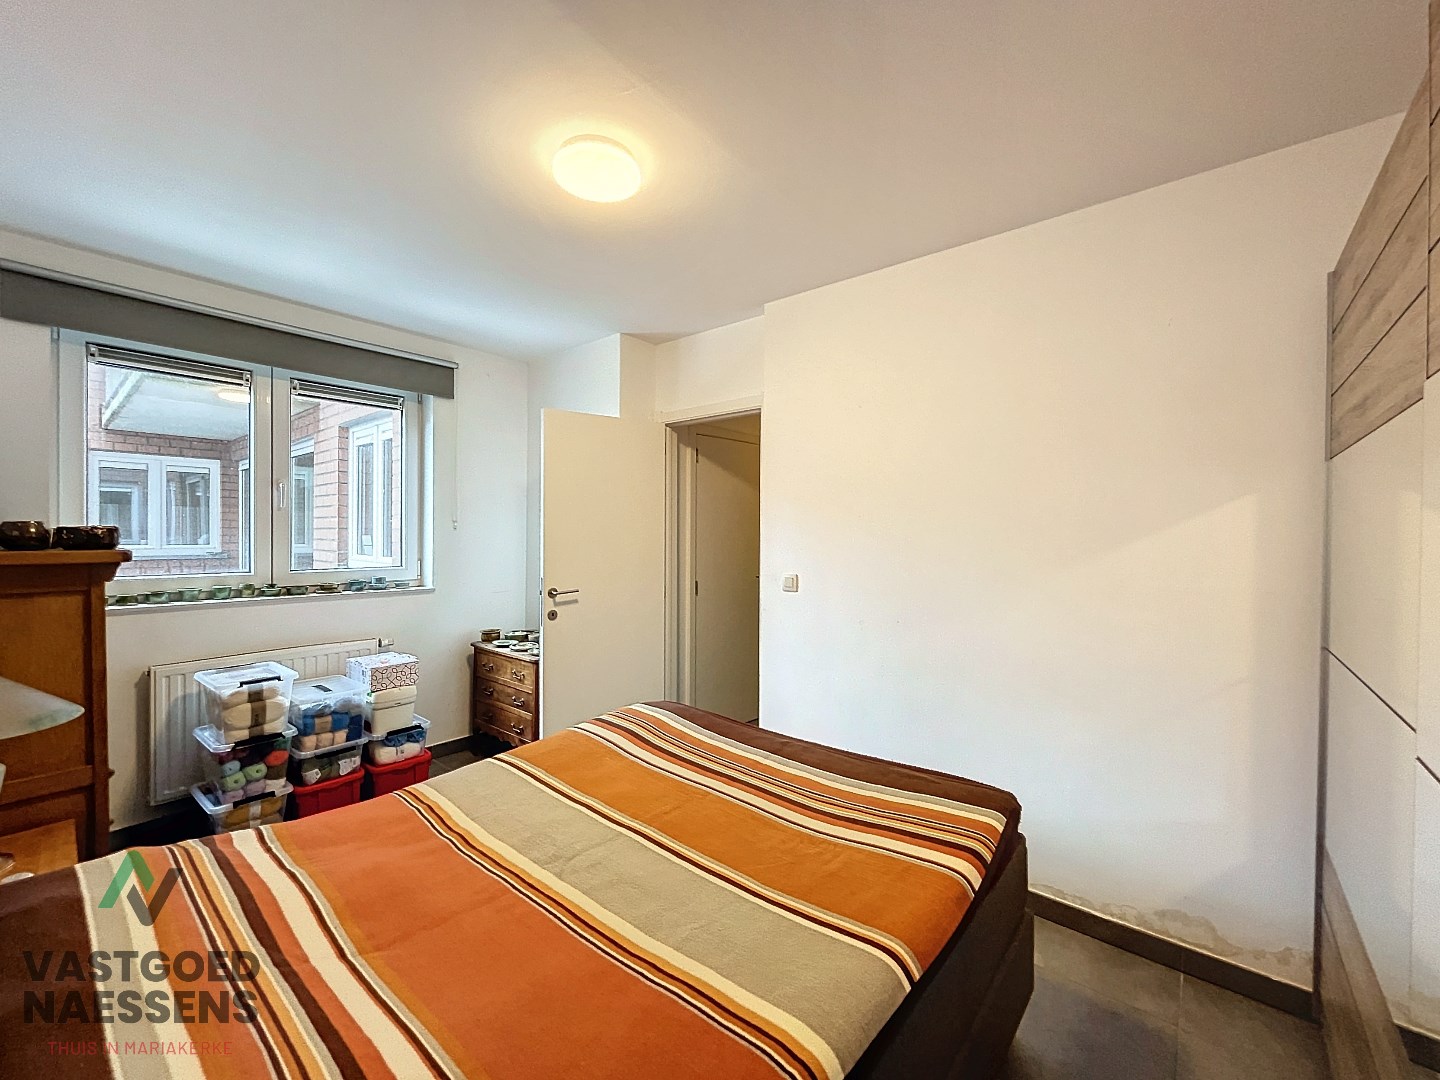 Appartement moderne &#224; 2 chambres &#224; coucher avec situation centrale et terrasse. 